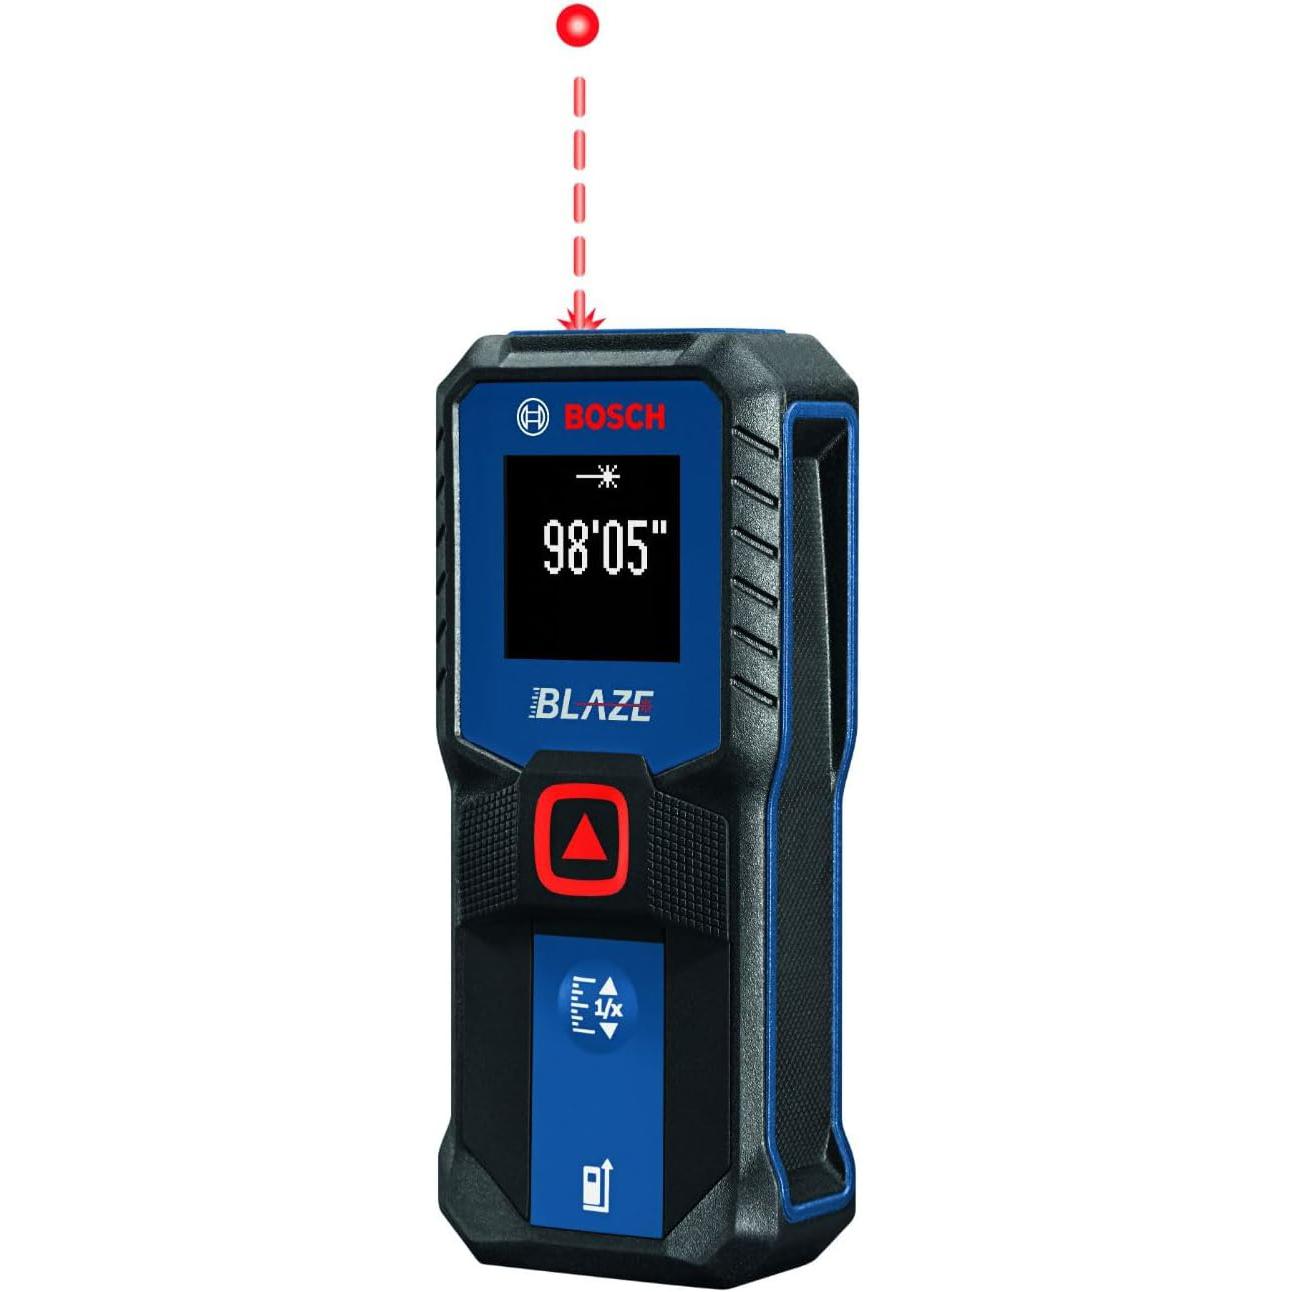 Bosch Blaze 100ft Laser Distance Measure for $39.98 Shipped